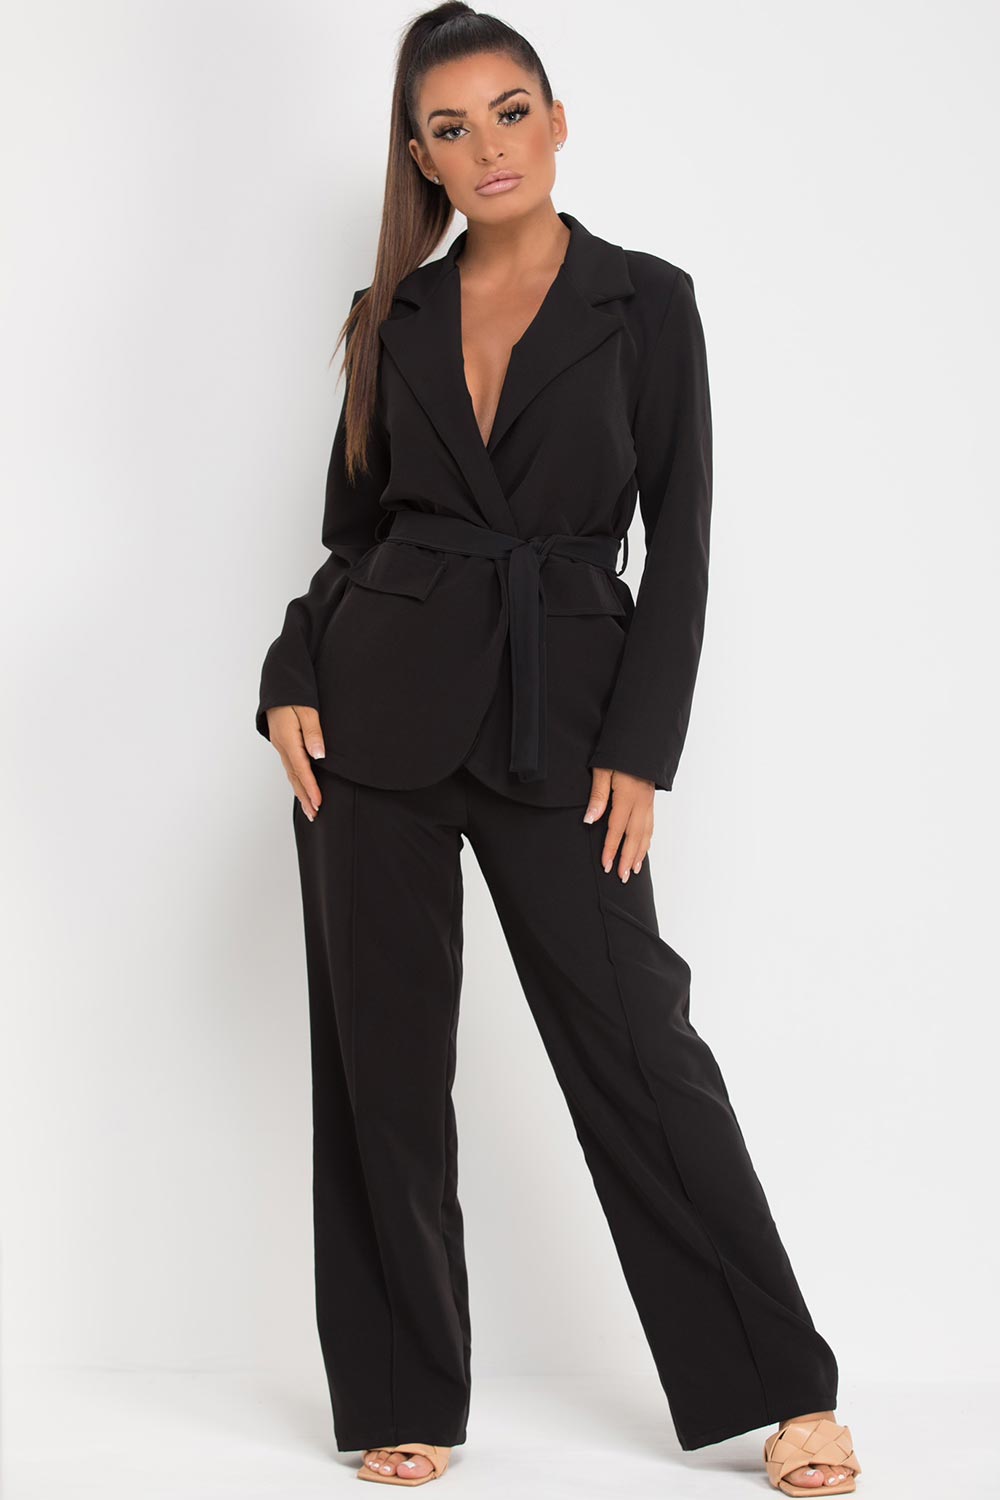 Bell Bottom Pants Suit Set With Black Blazer, Puffed Sleeve Blazer for  Women, Black Trouser Set for Women, Black Pants Suit Set Womens -   Canada